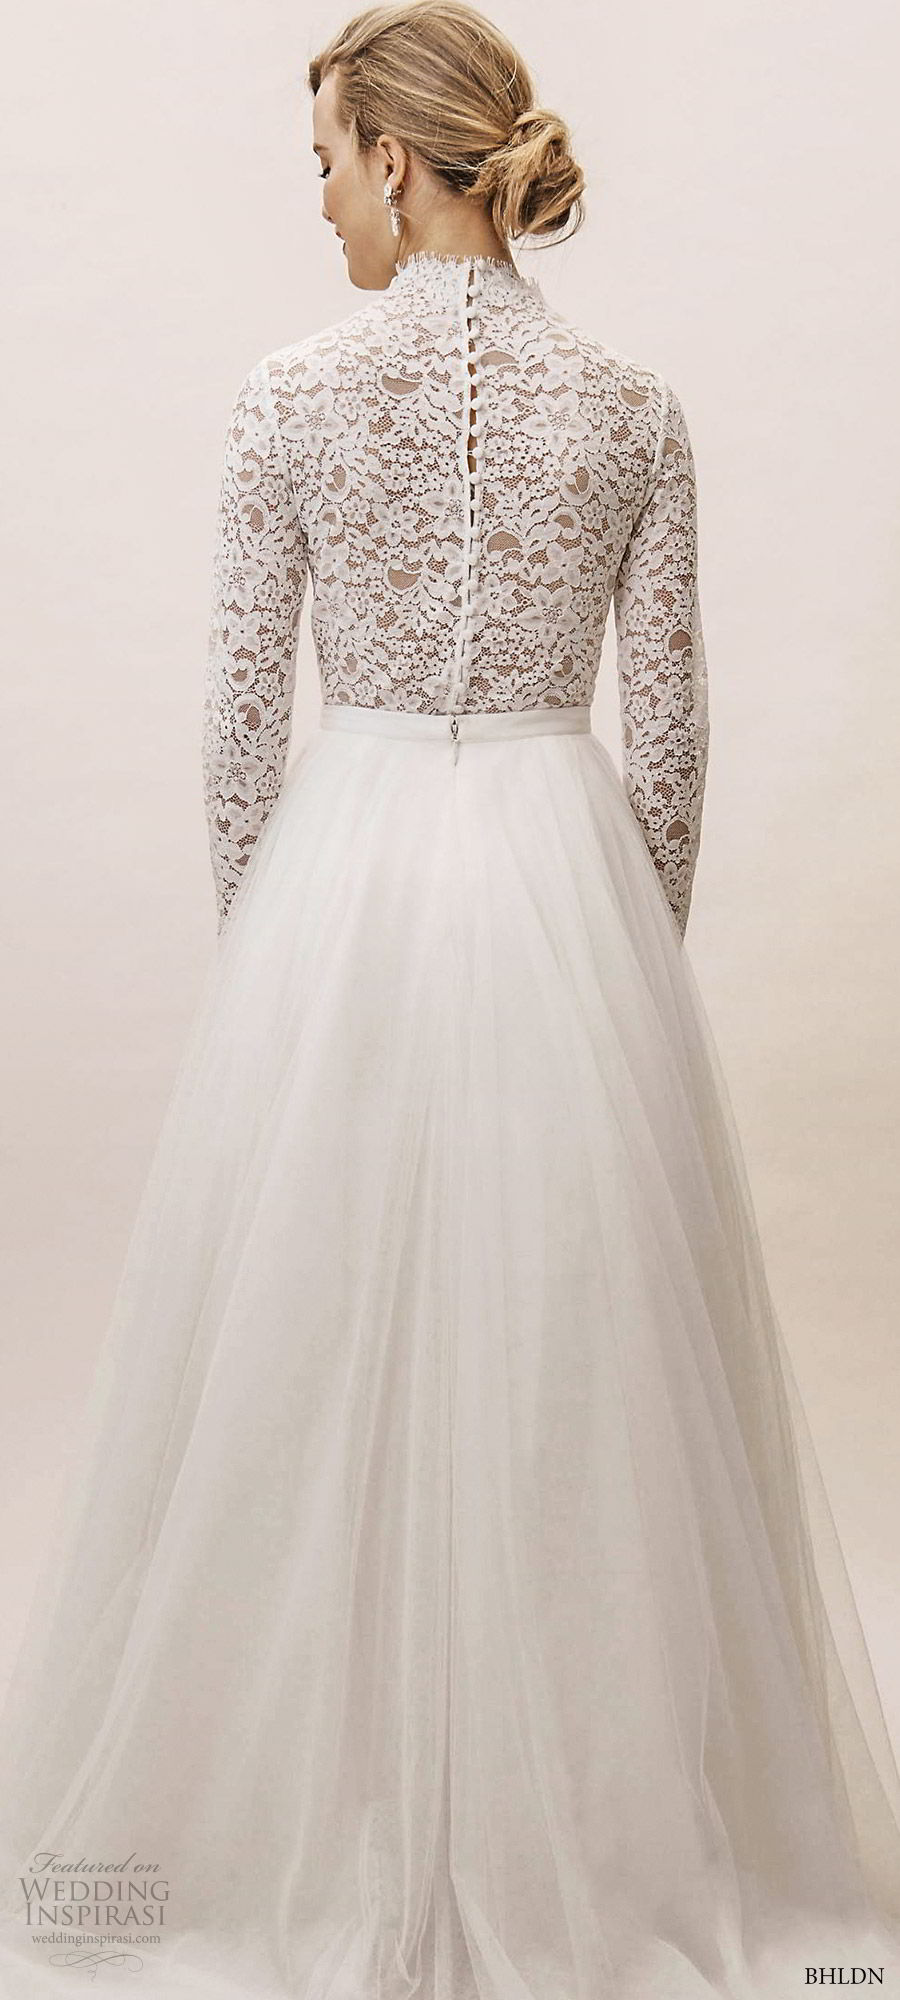 bhldn spring 2019 bridal long sleeve high neck lace top a line ball gown skirt 2 piece wedding dress (13) elegant romantic modest bv